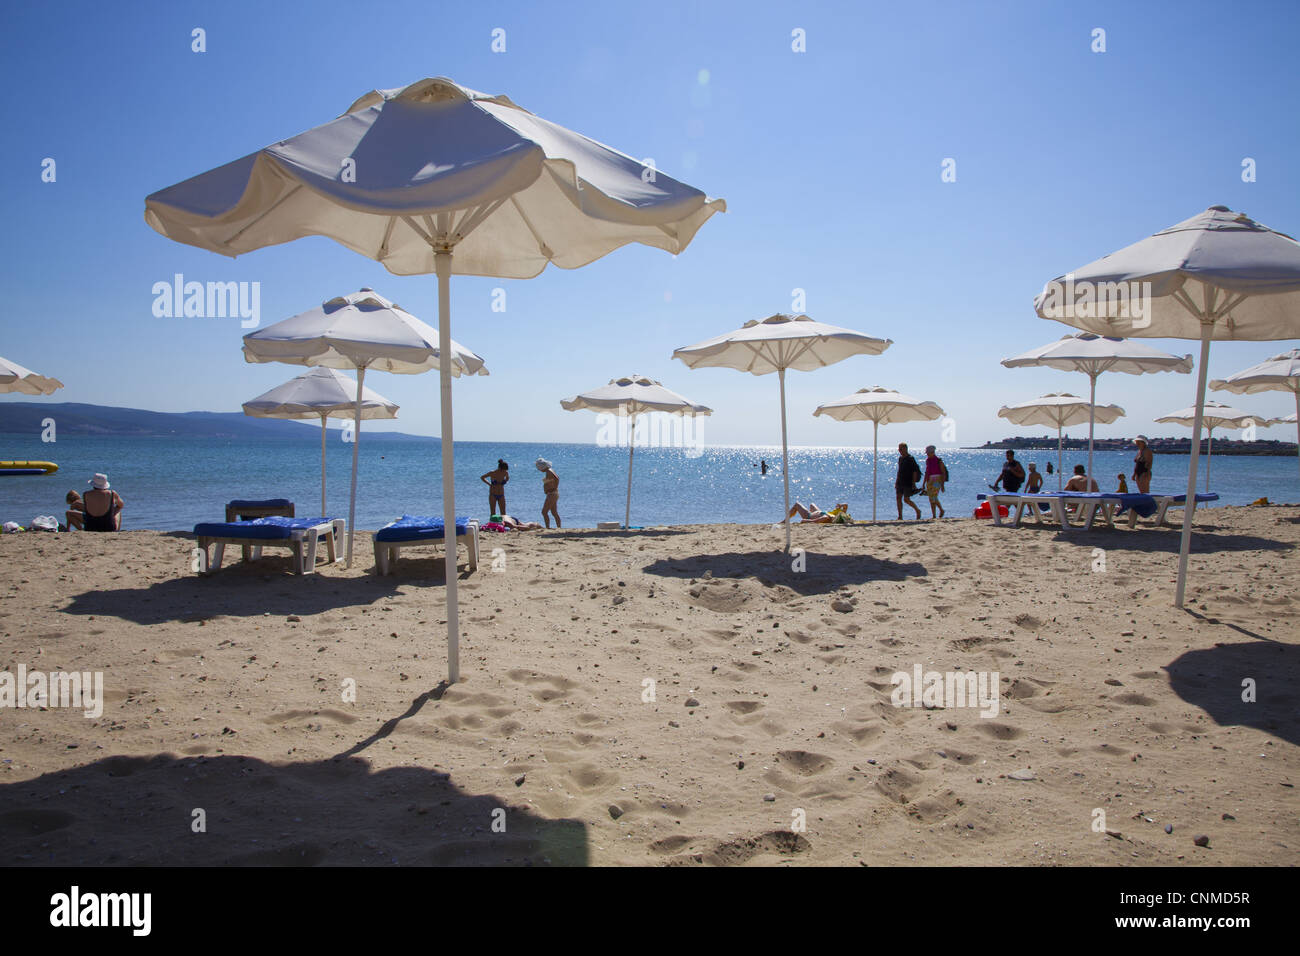 People enjoying the beach and sunshades, South Sunny Beach, Black Sea Coast, Bulgaria, Europe Stock Photo